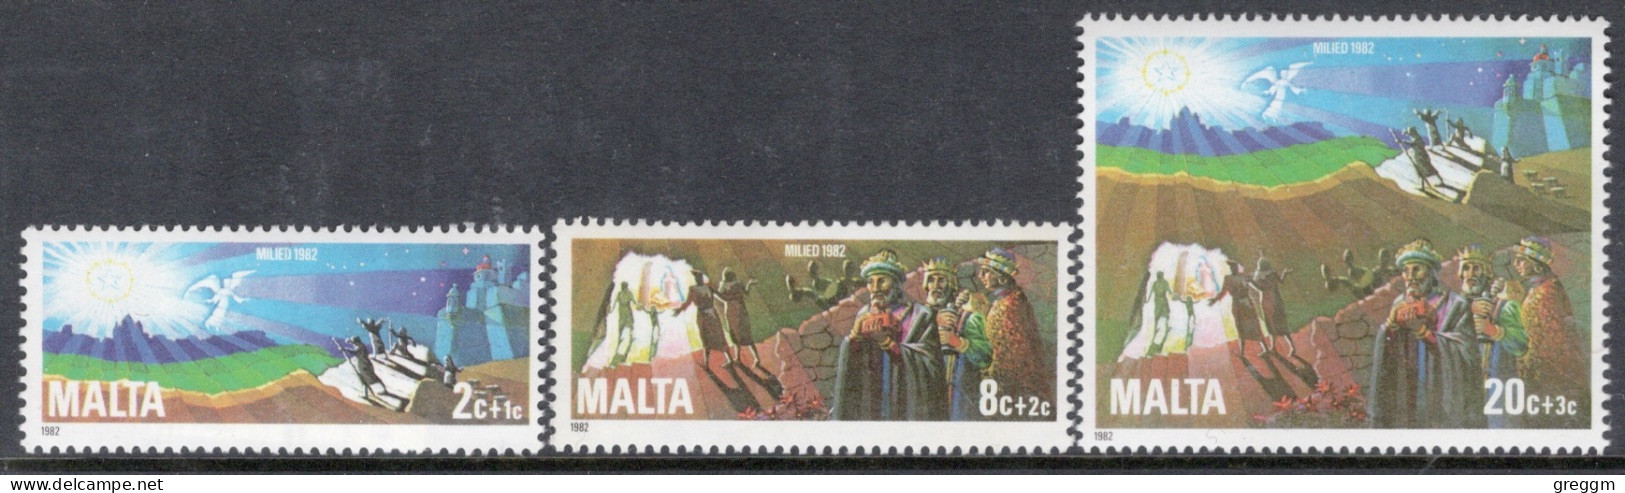 Malta 1982 Set To Celebrate Christmas In Unmounted Mint - Malta